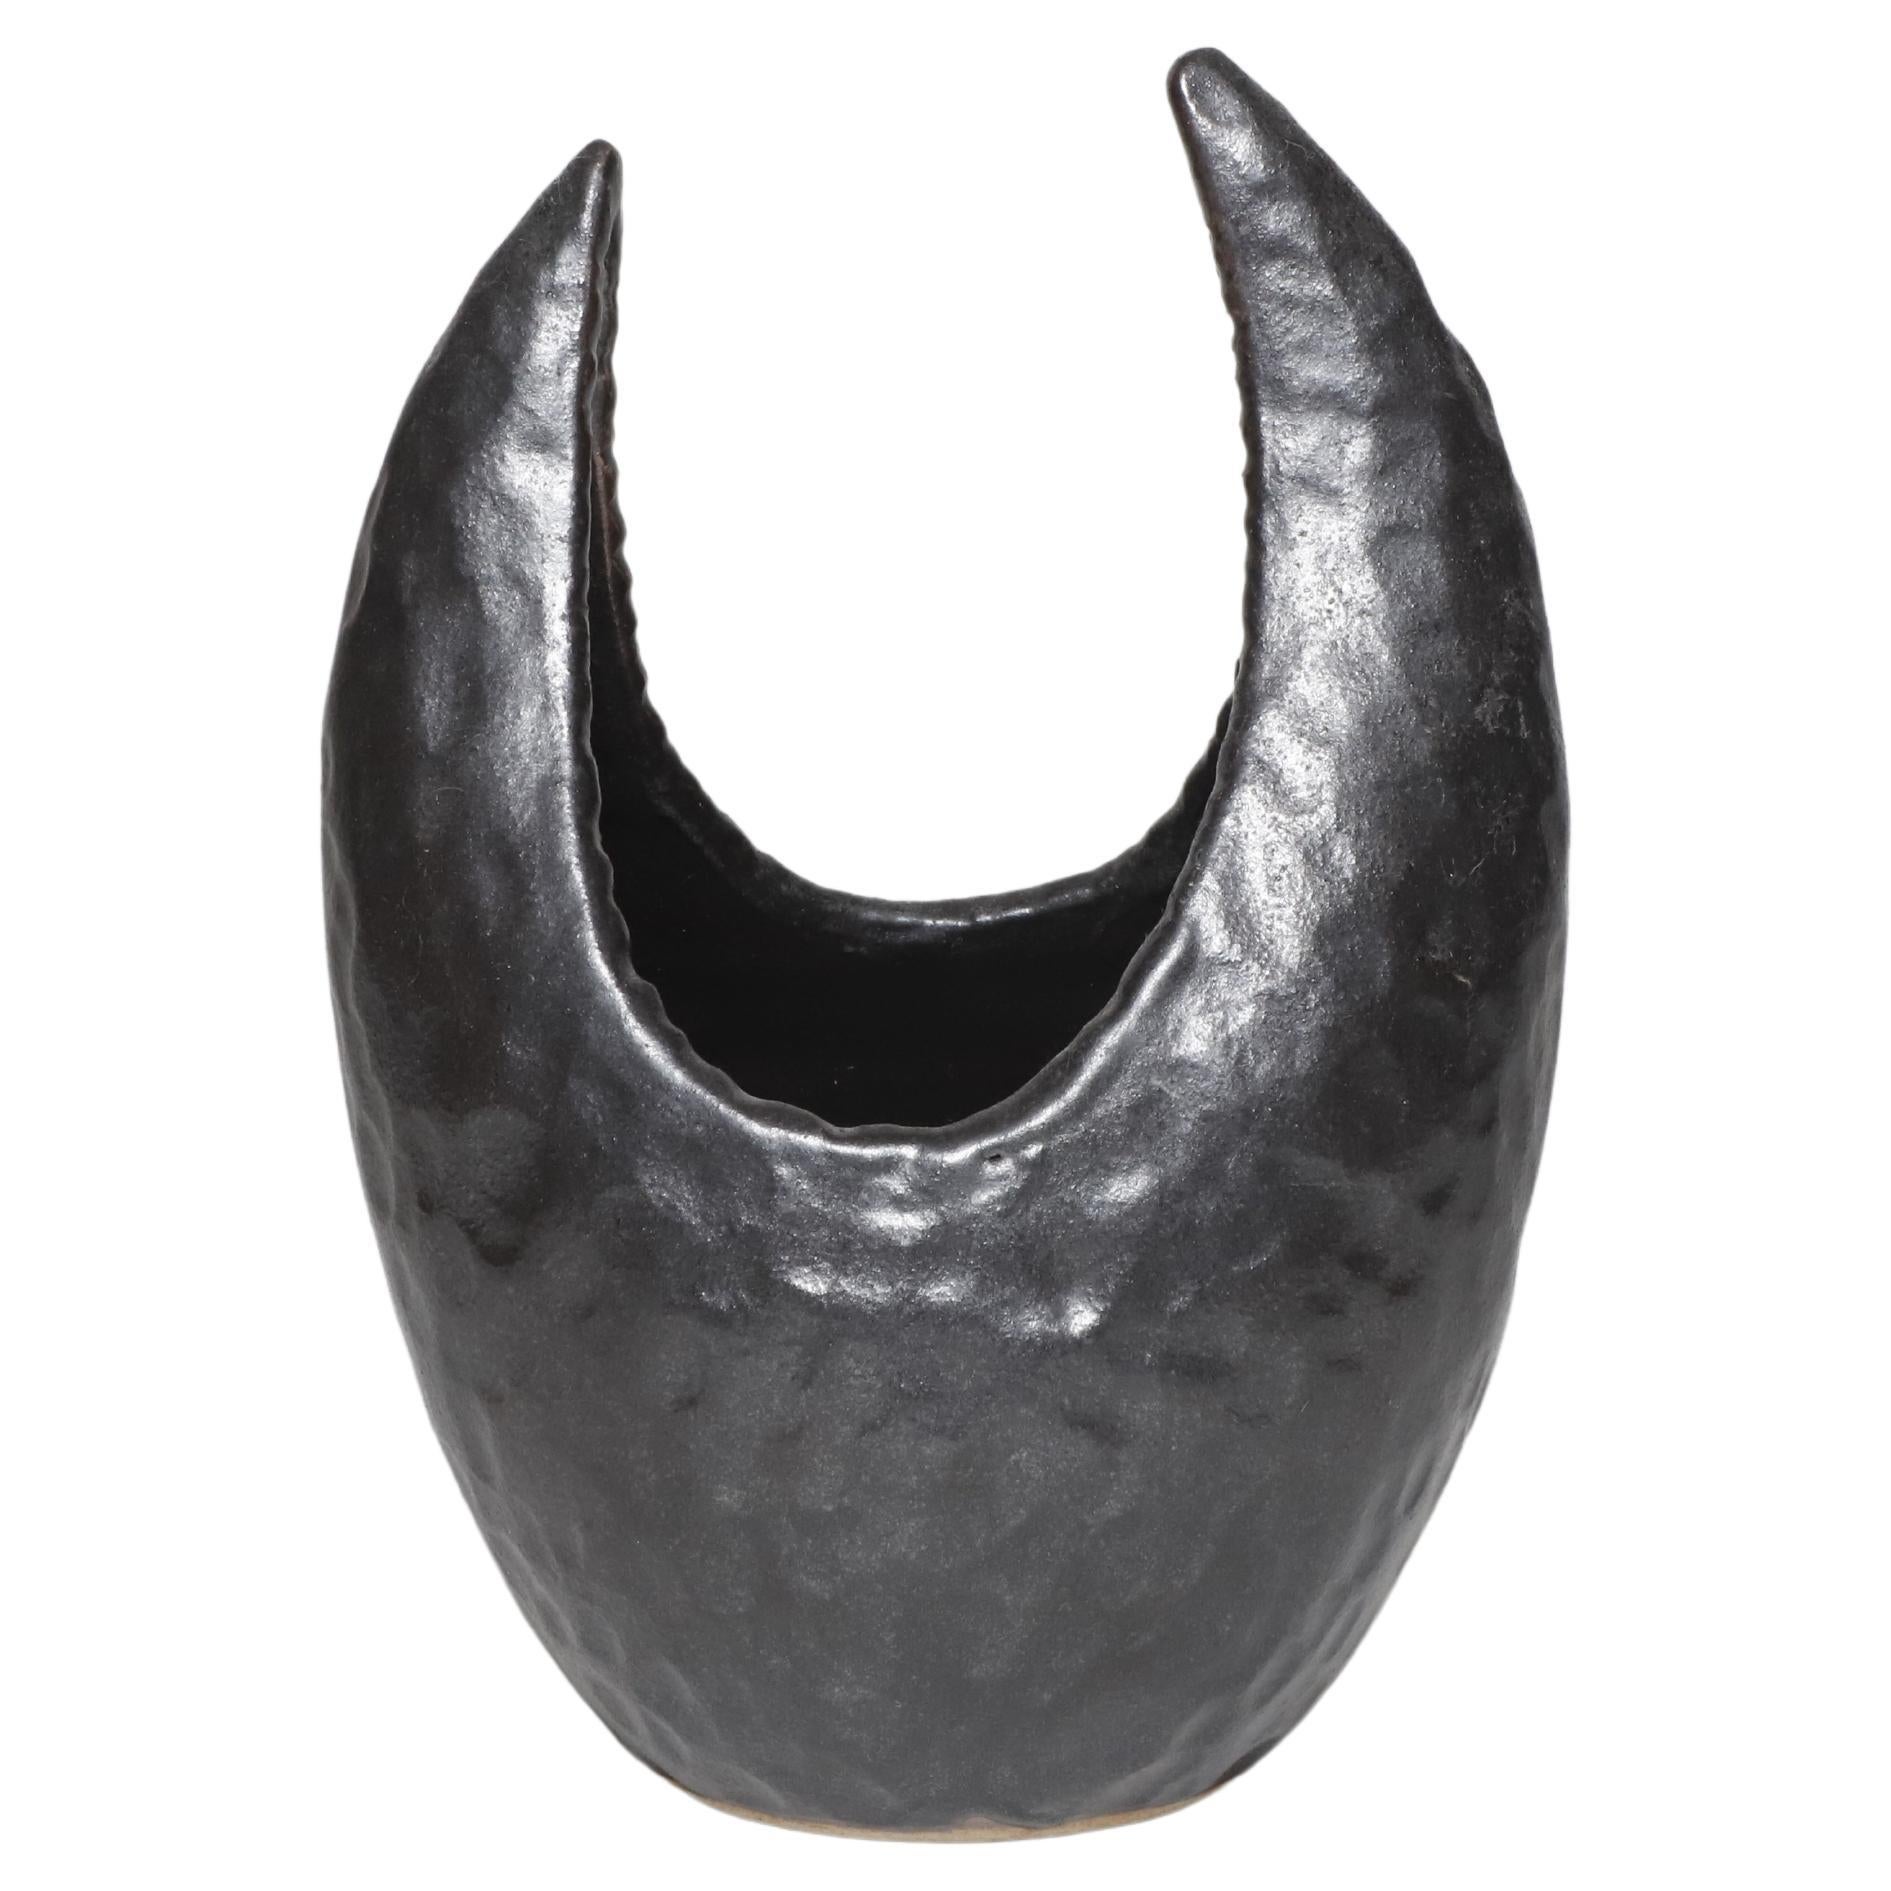 Hammered Metal Decorative Bowl For Sale